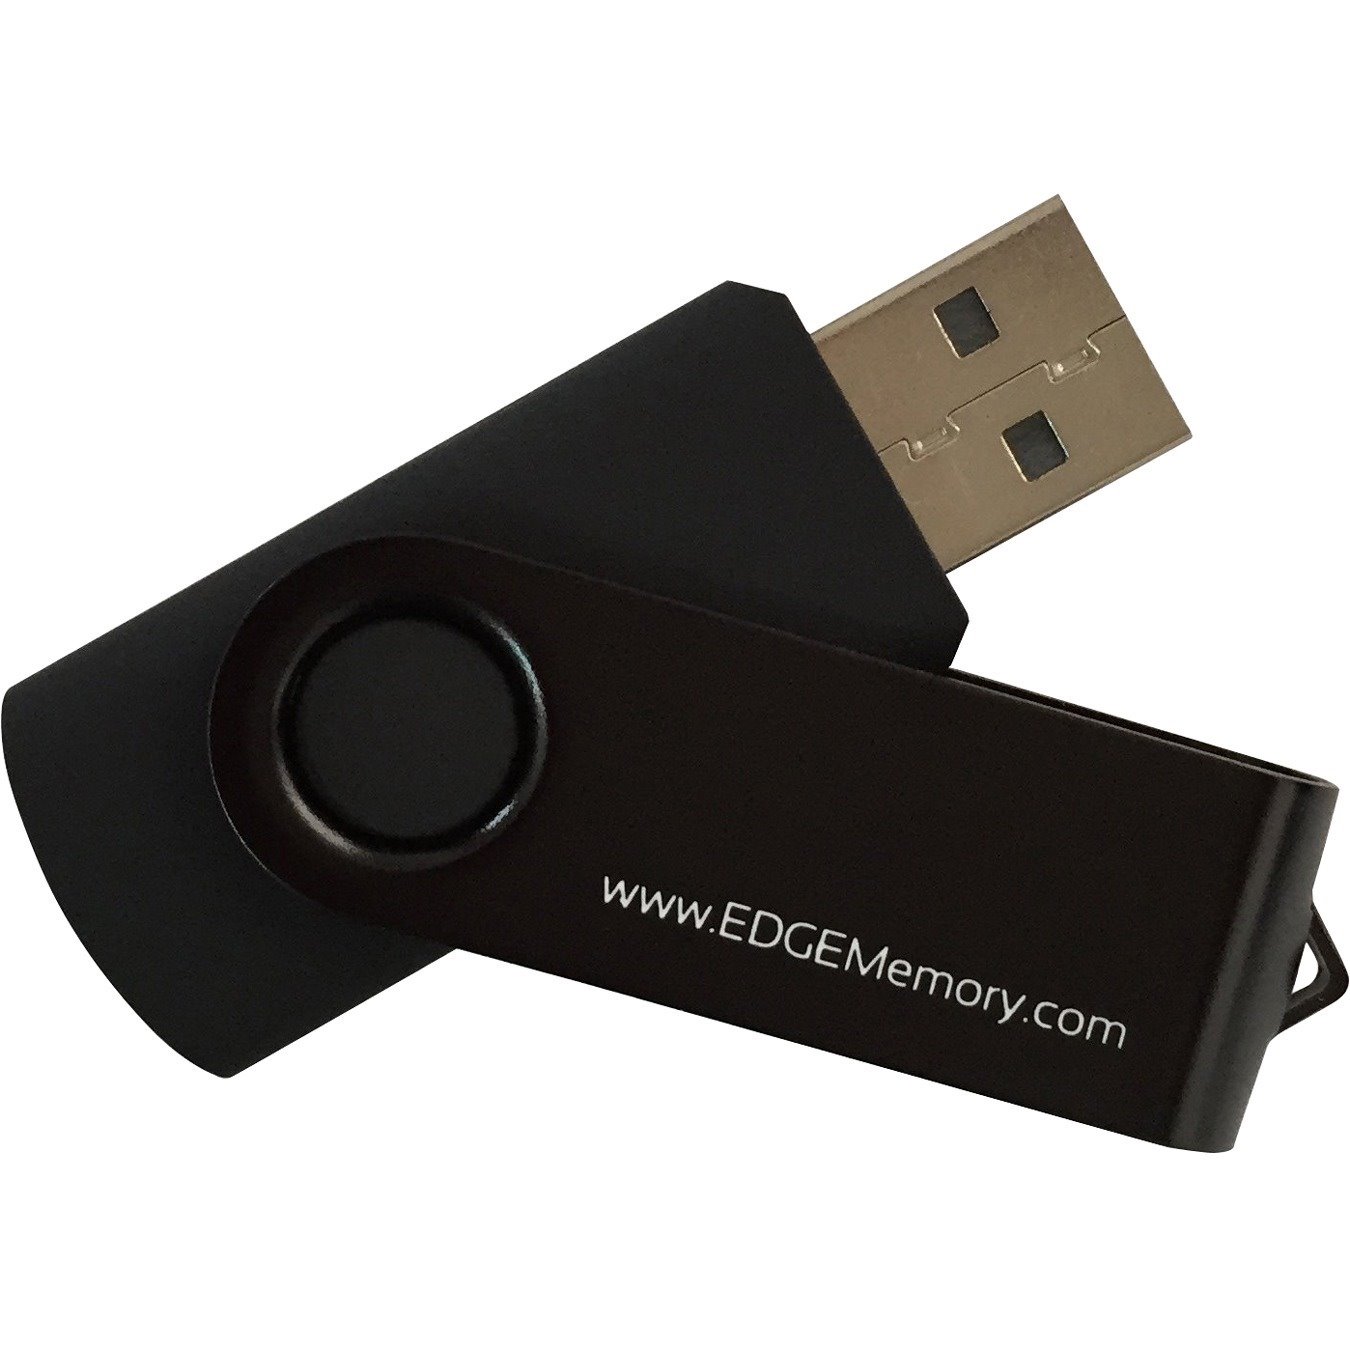 EDGE 16GB C3 USB 3.0 Flash Drive